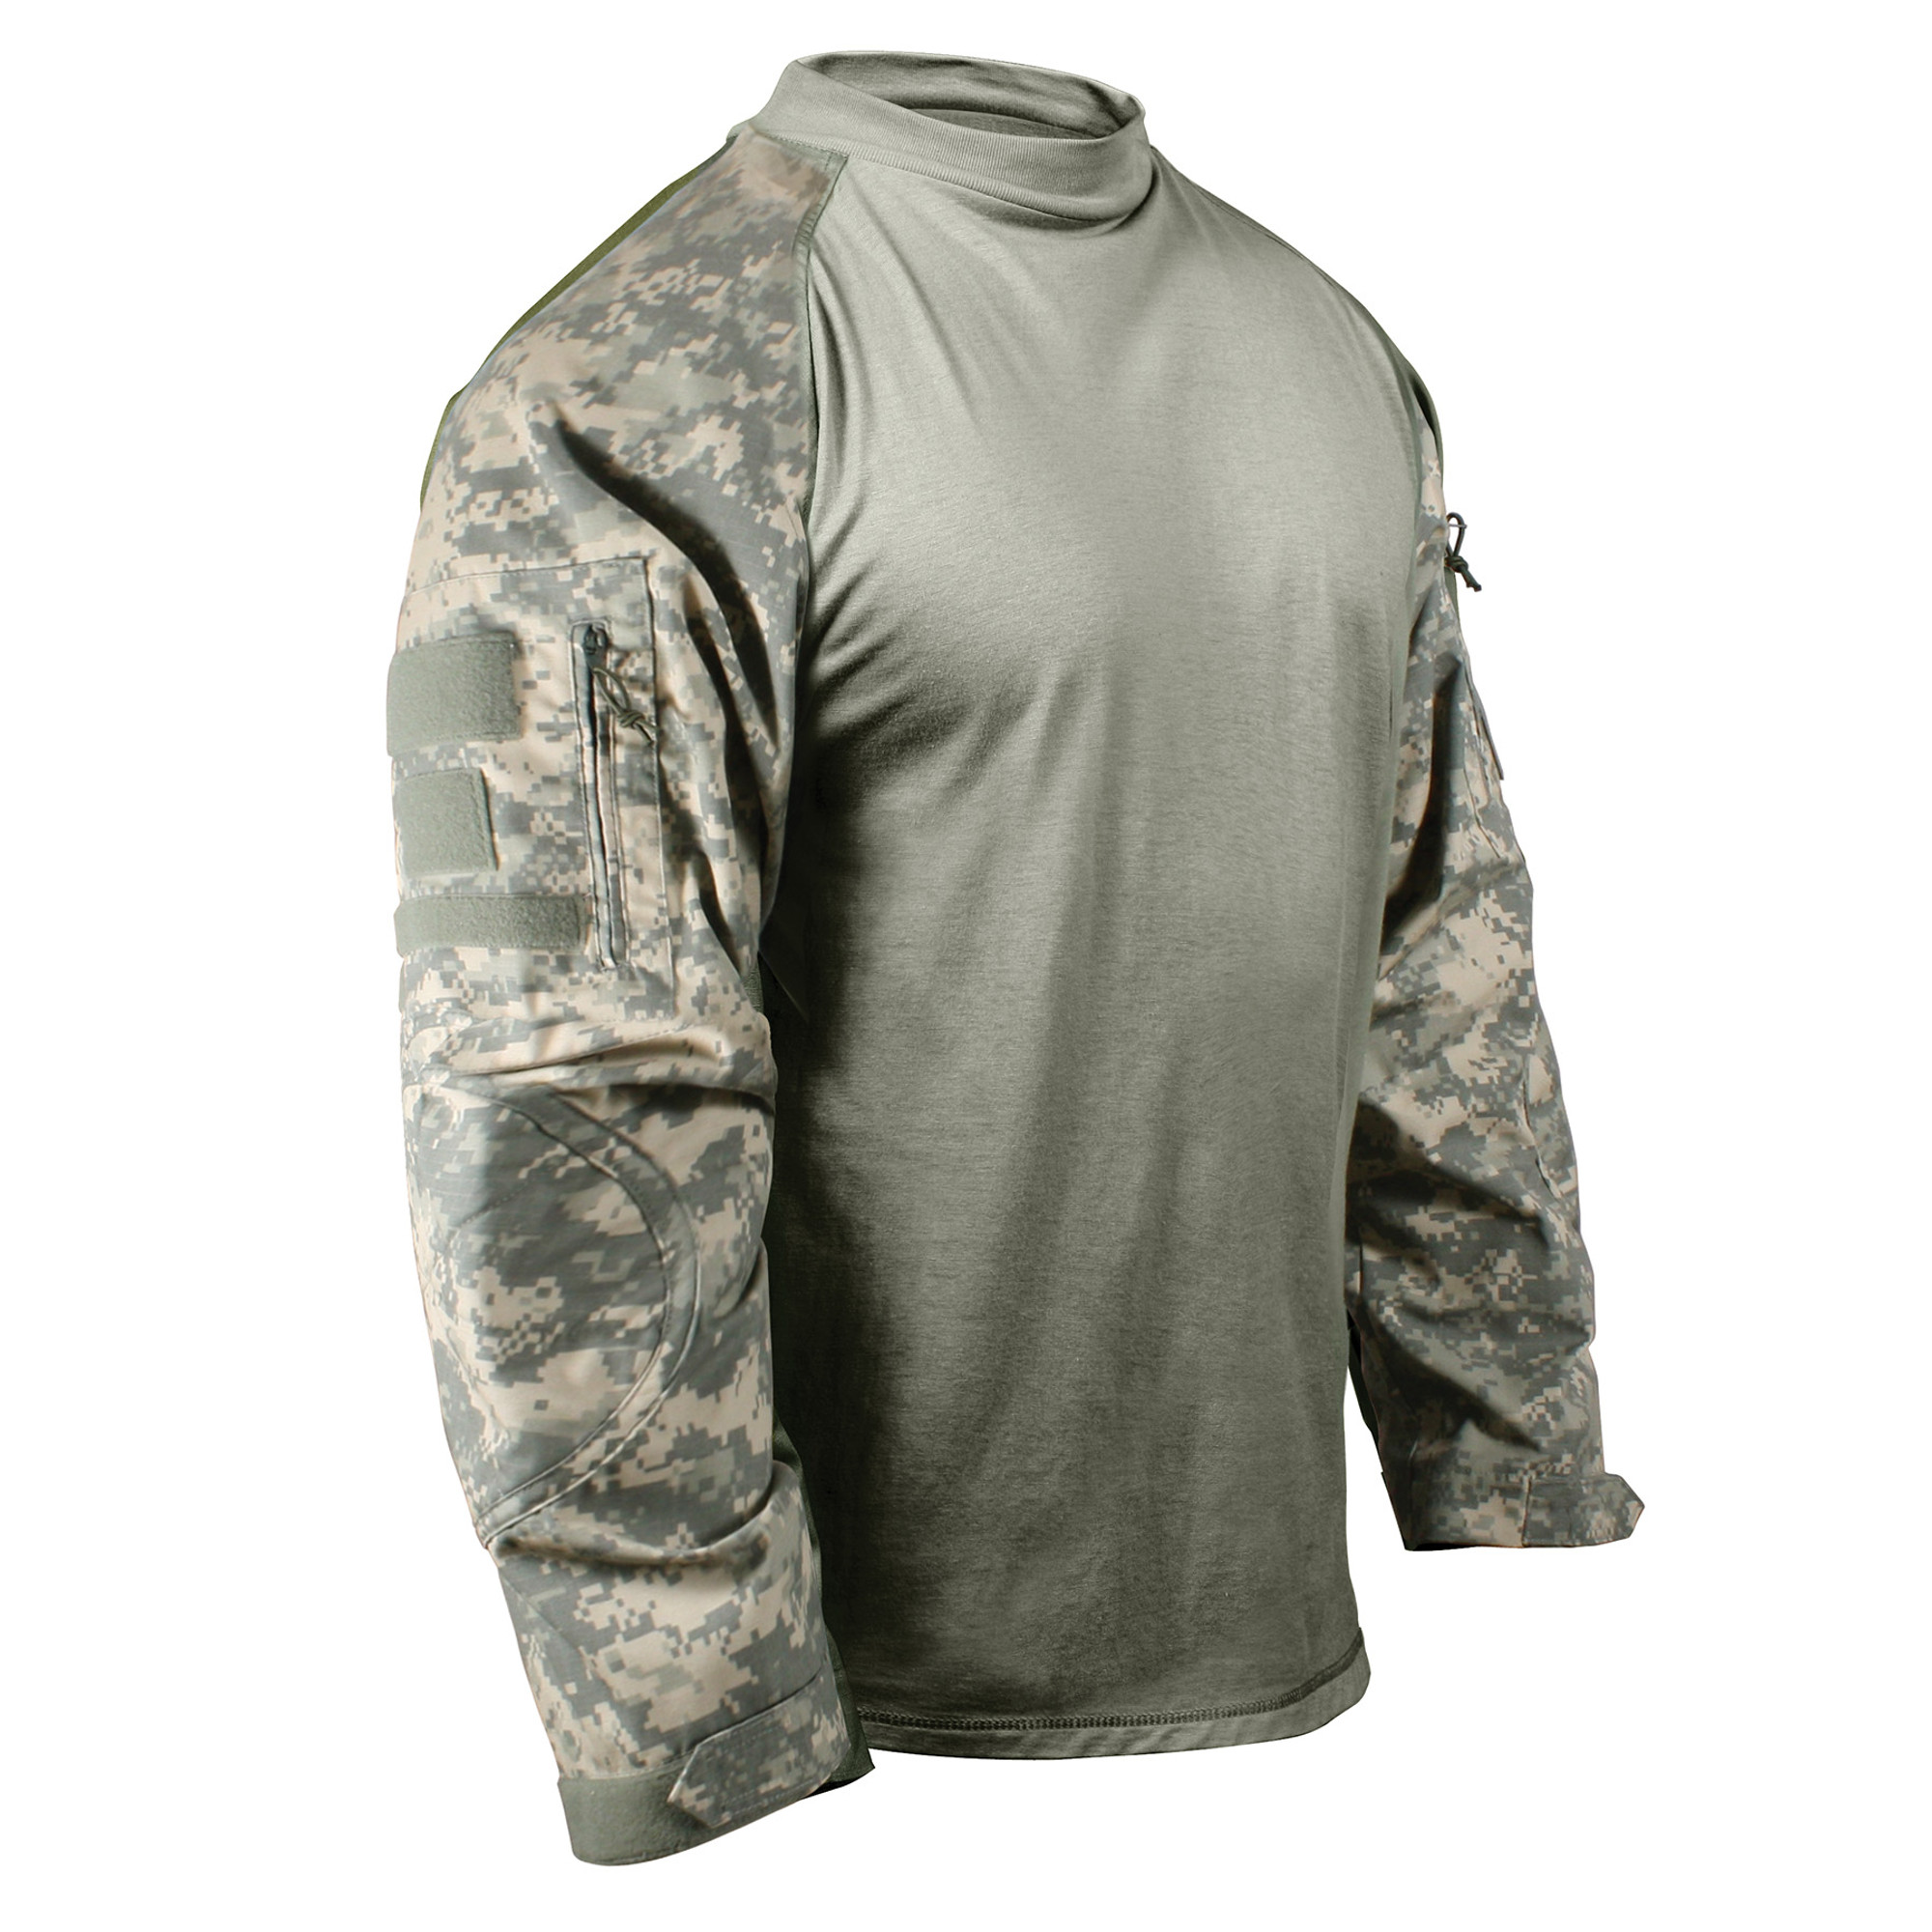 Rothco Tactical NYCO Airsoft Combat Shirt - ACU Digital Camo